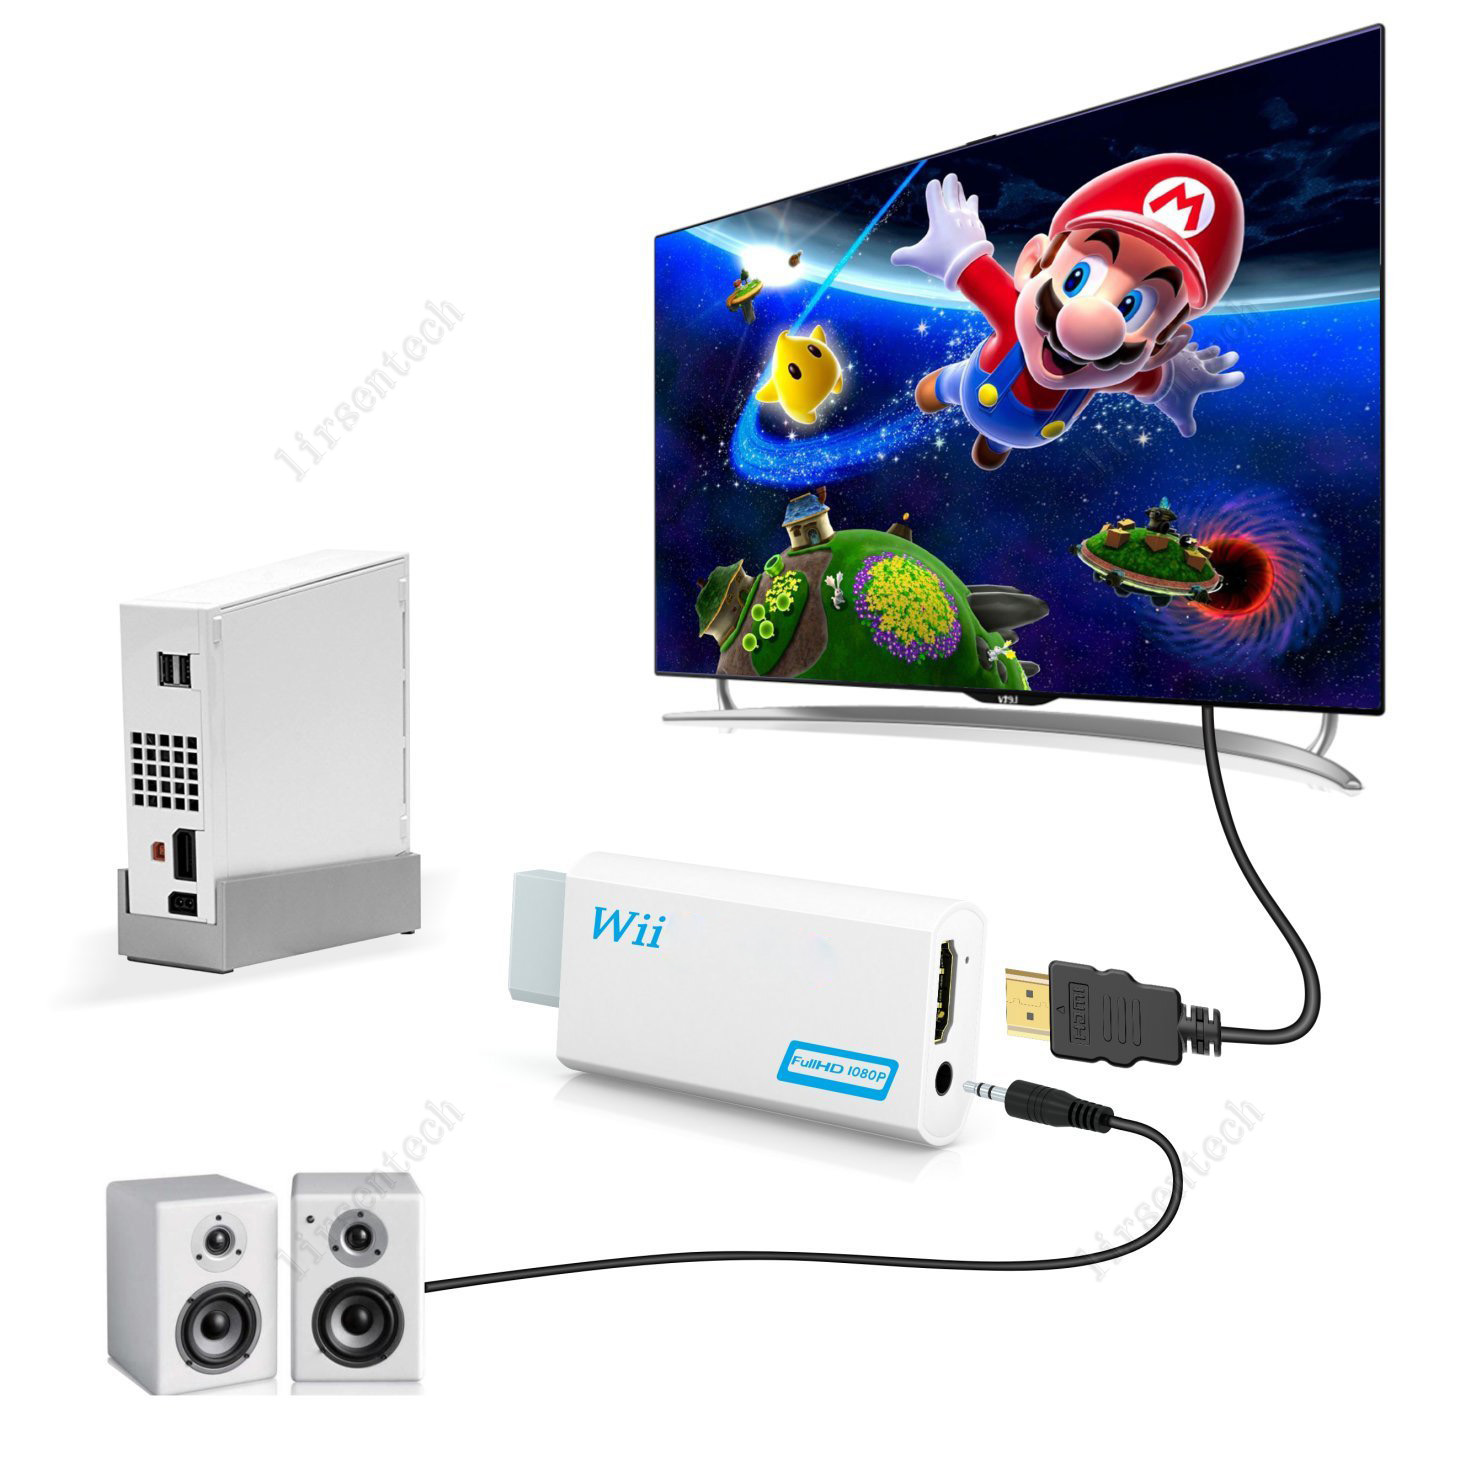 Full HD 1080p Wii в HDMI-совместимый адаптер конвертера Wii2HDMI-совместимый конвертер 3,5 мм аудио для дисплея монитора HDTV PC HDTV